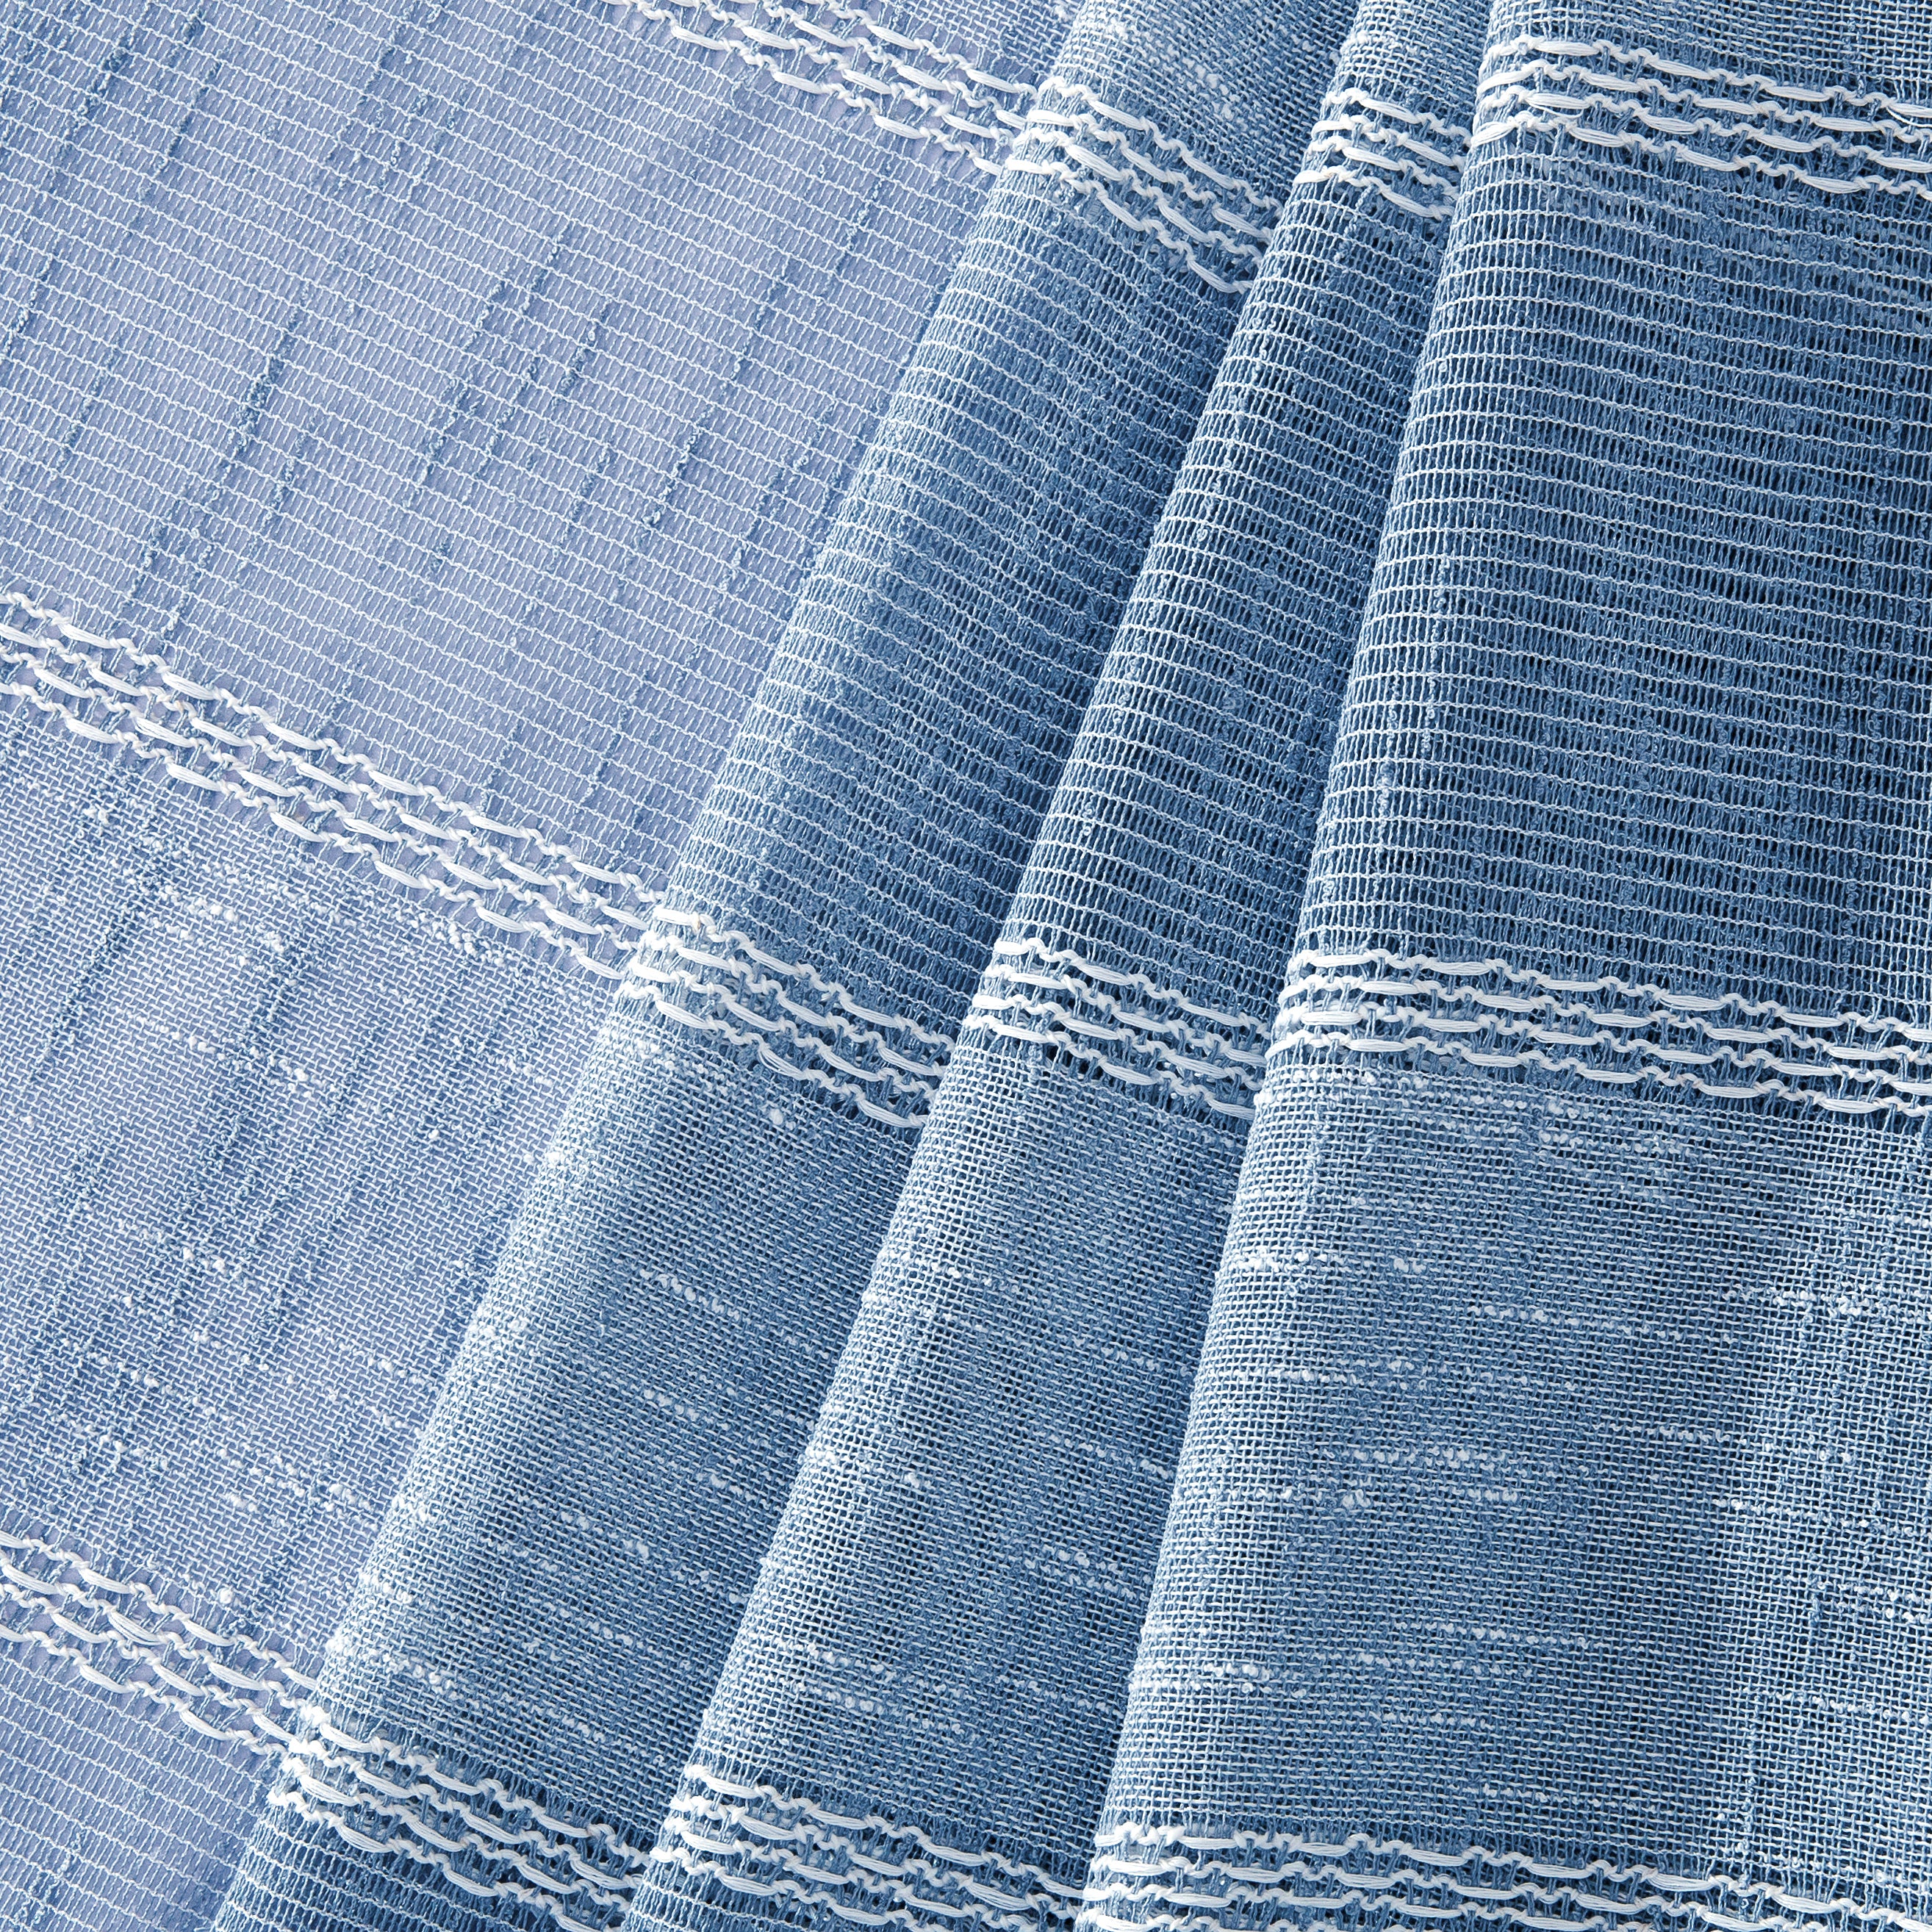 Dainty Home Megan 3D Linen Textured Linen Look Chenille Striped Designed Fabric Shower Curtain